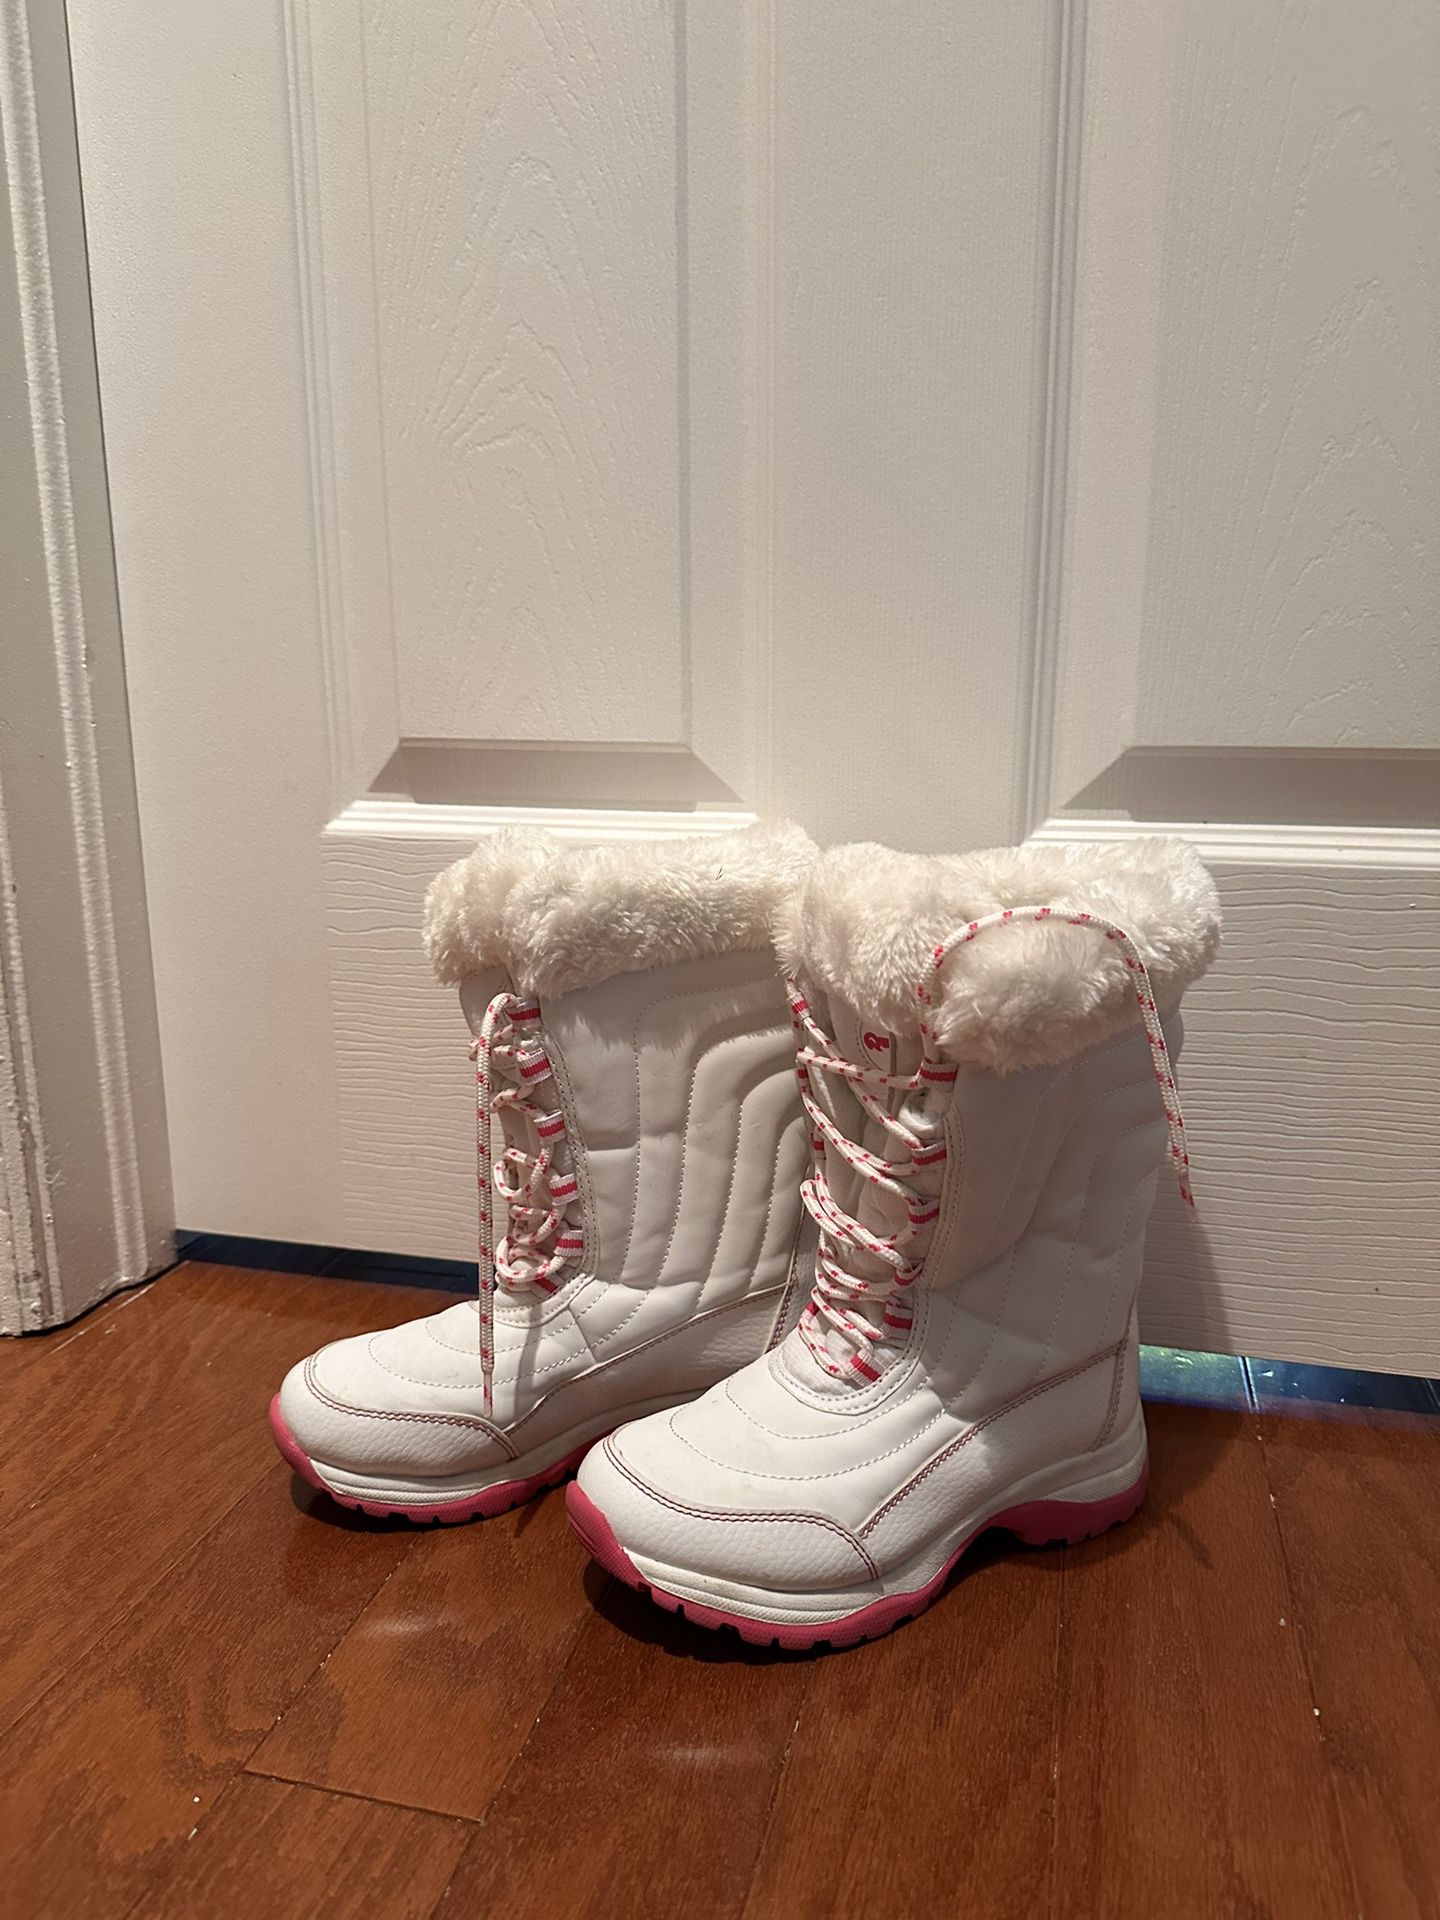 Quest Winter / Snow Boots. Size 1 Kids